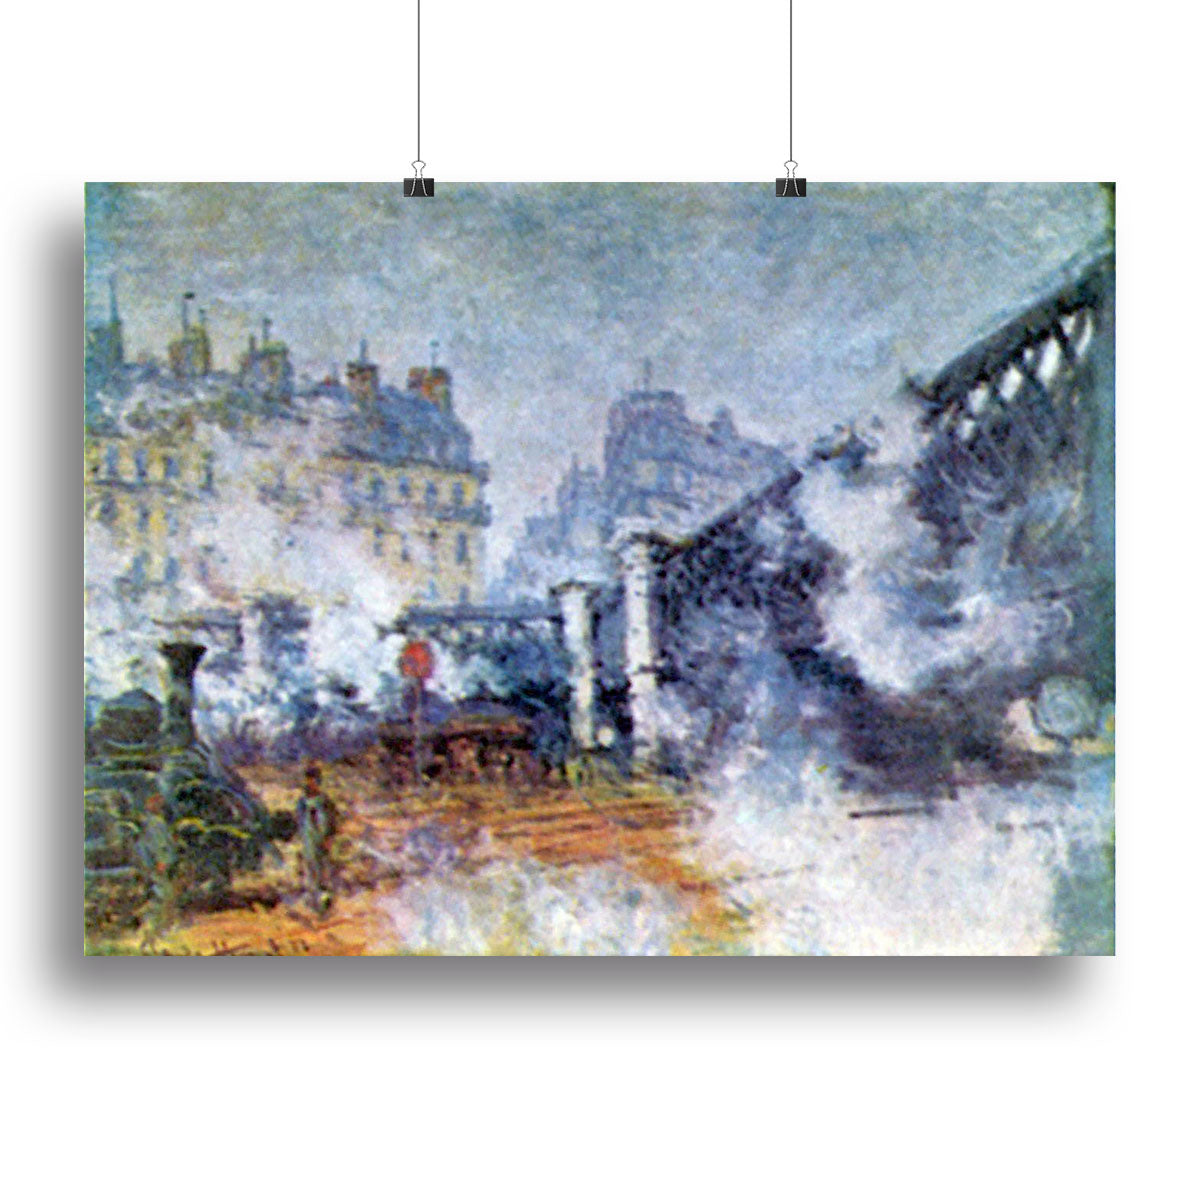 The Europe Bridge Saint Lazare station in Paris by Monet Canvas Print or Poster - Canvas Art Rocks - 2